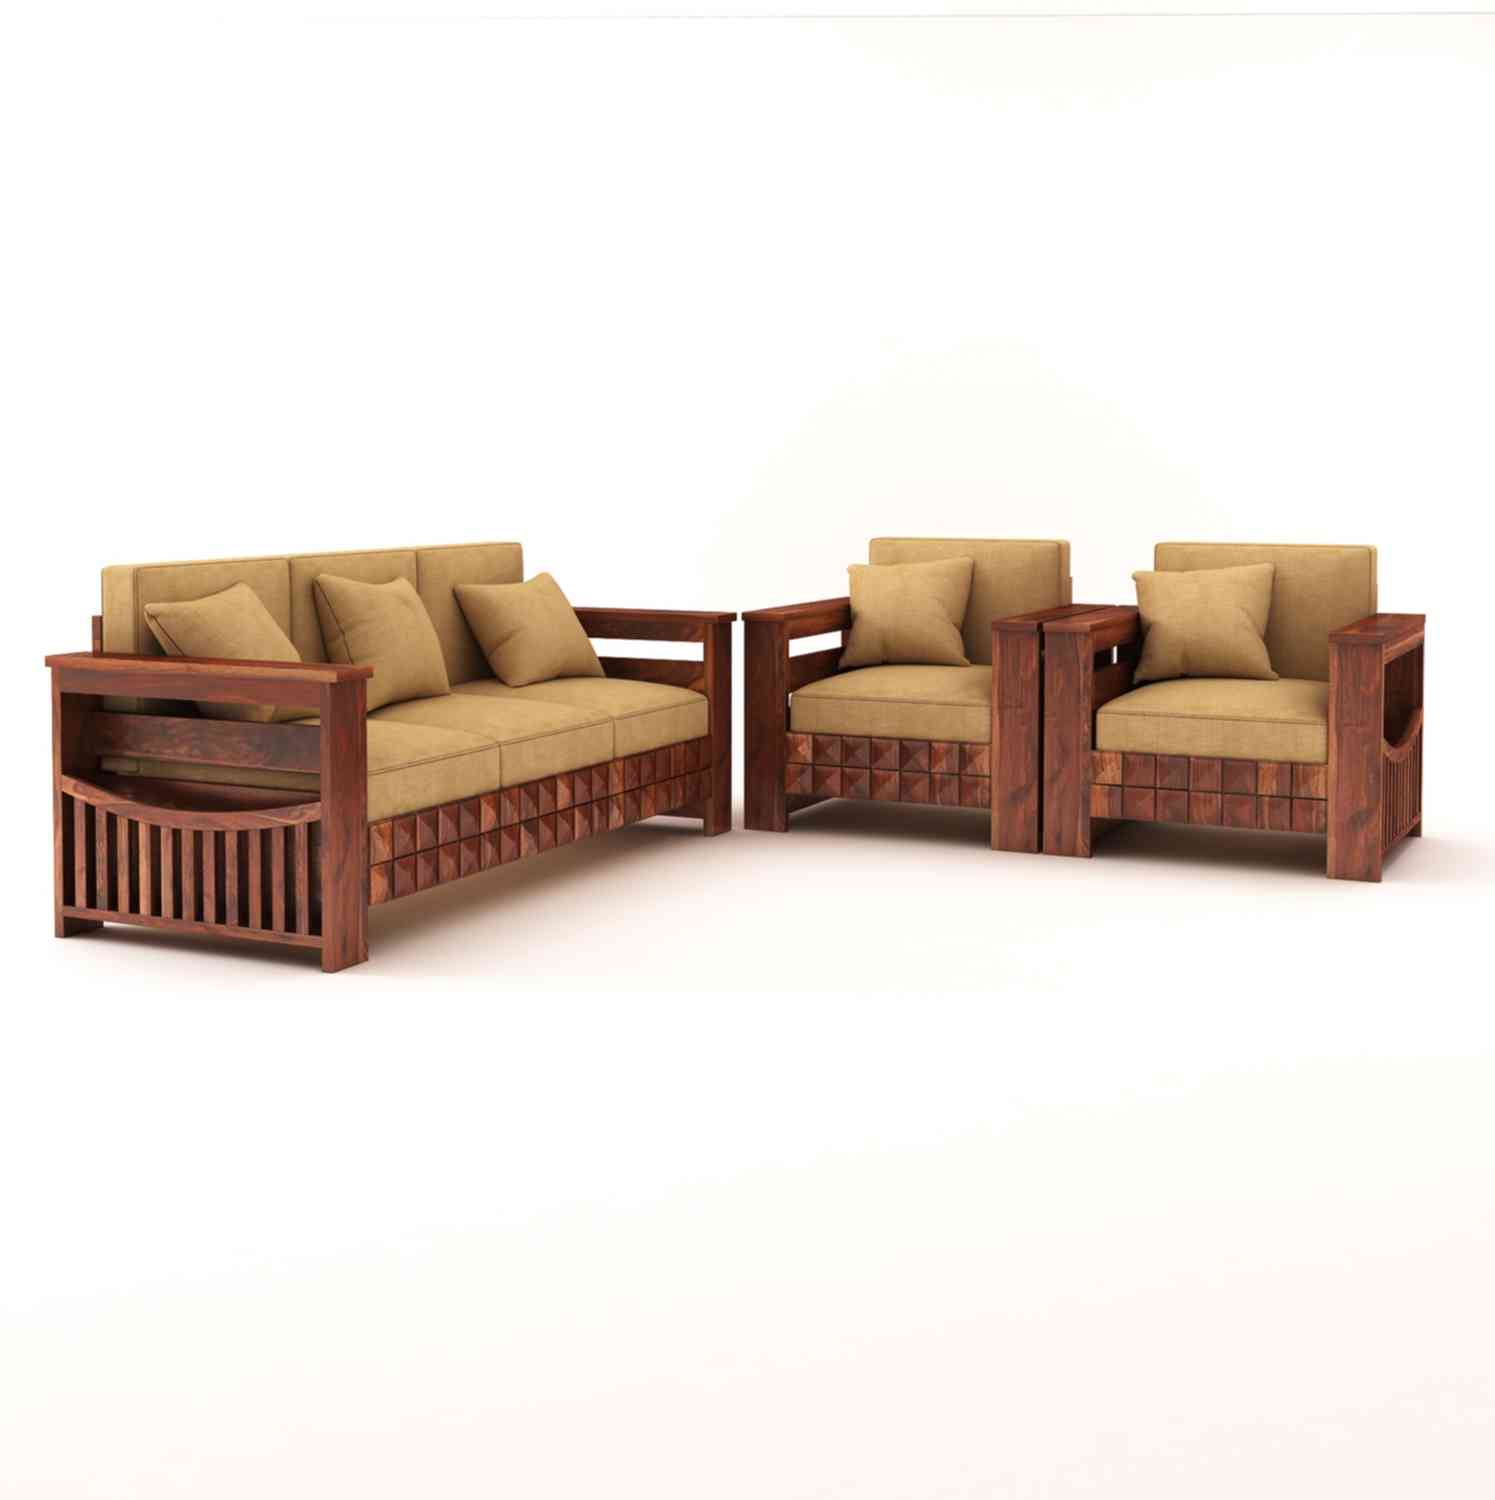 Sofia Solid Sheesham Wood 5 Seater Sofa Set (Natural Finish, 3+1+1)